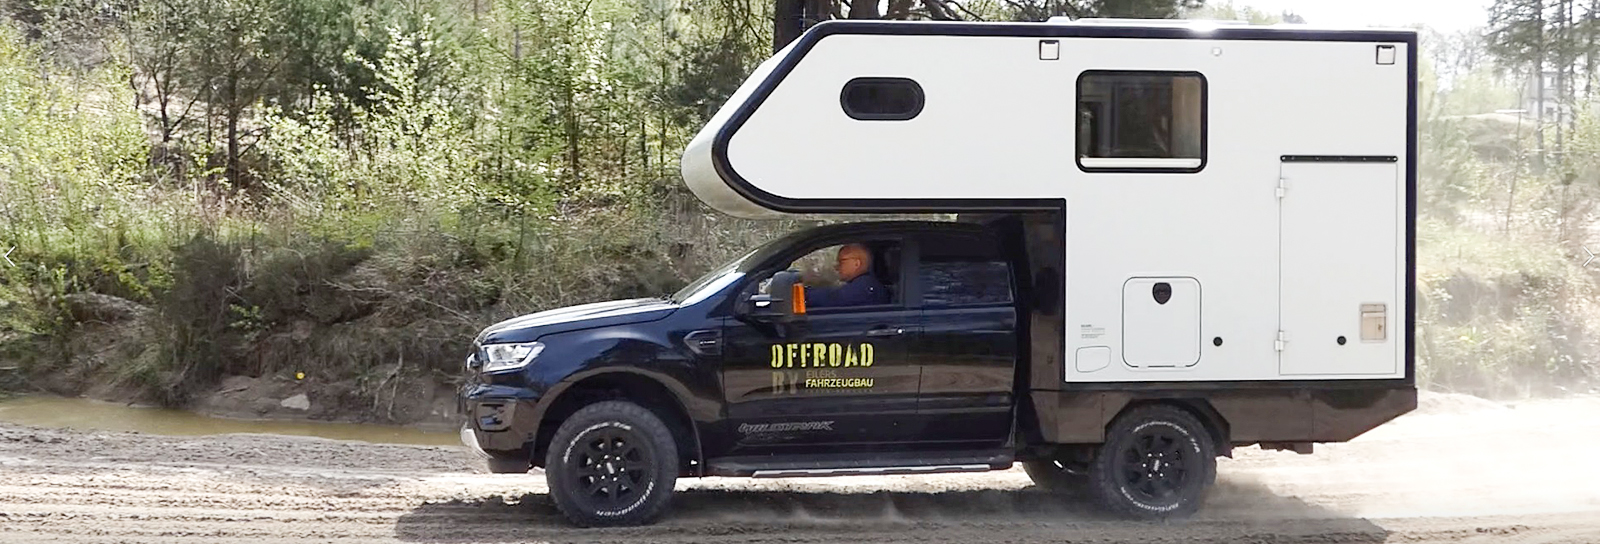 Offroad Camper